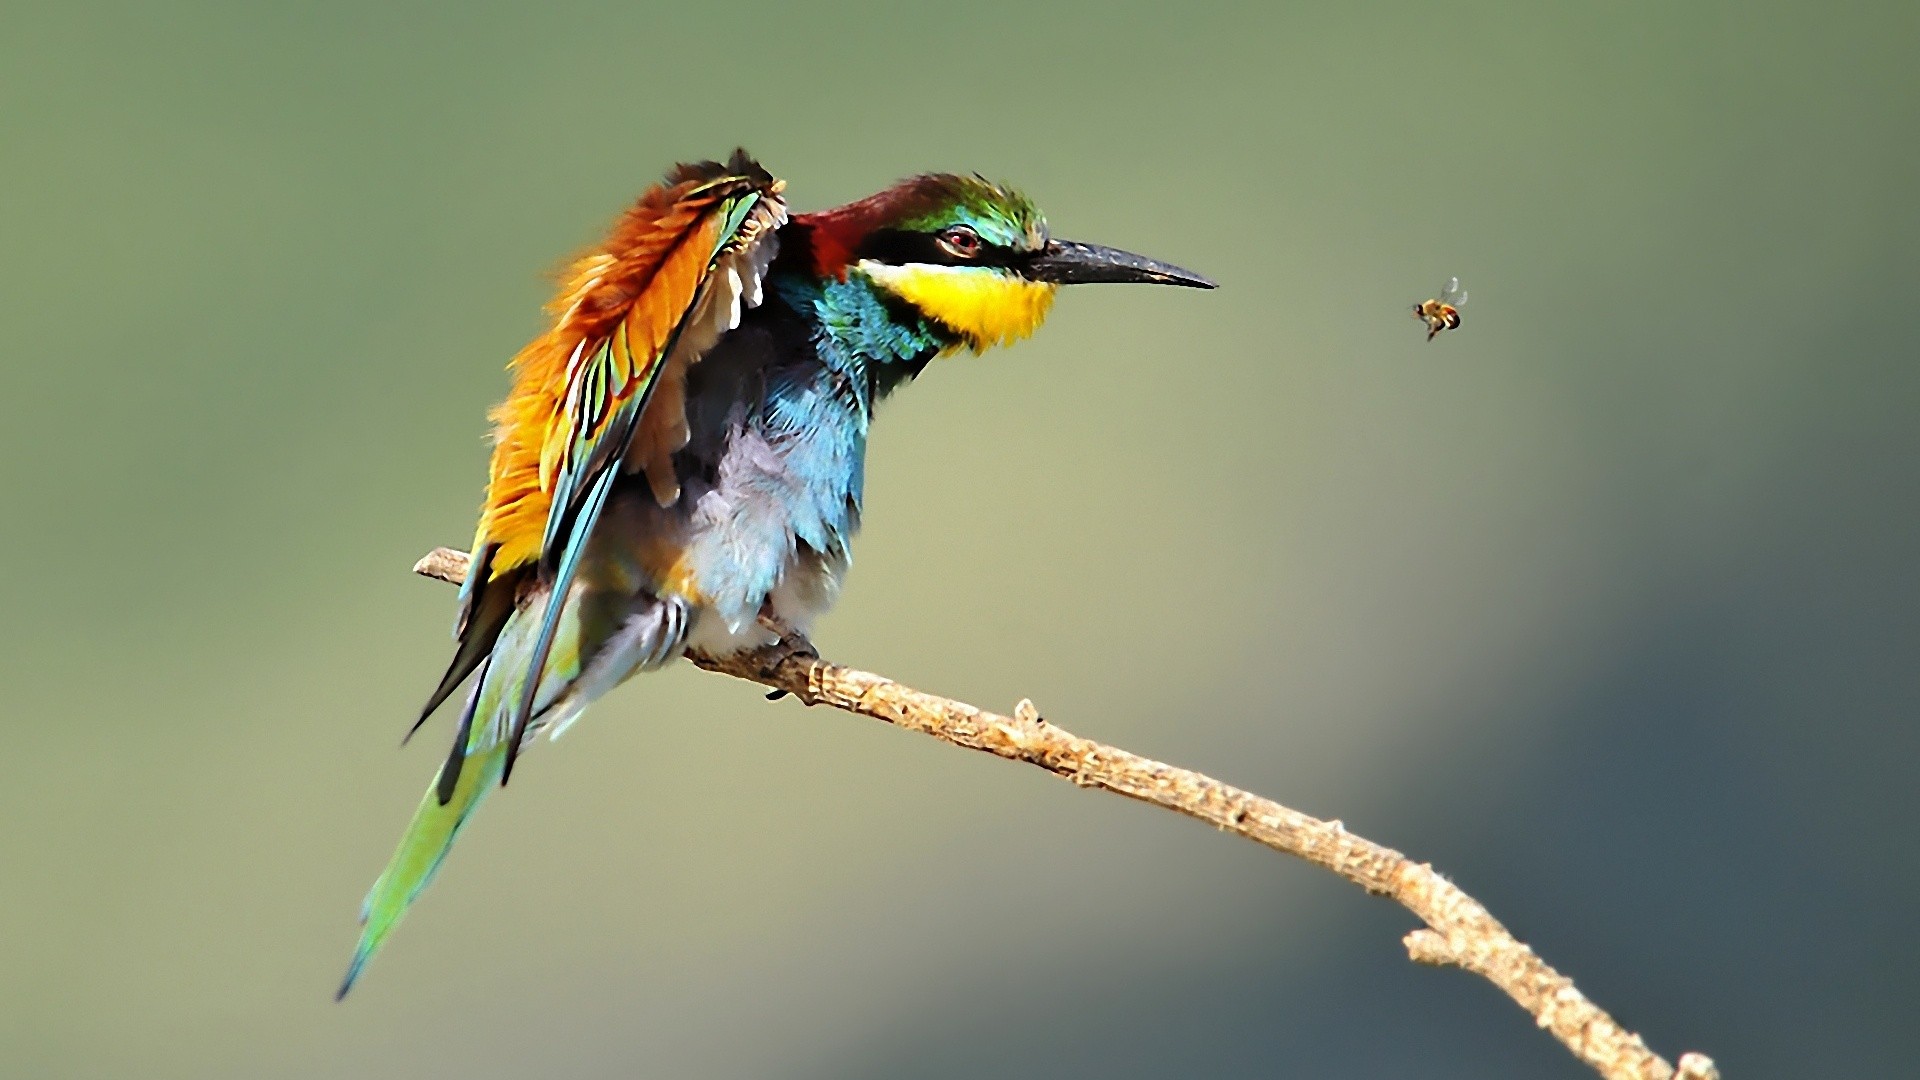 247720 descargar imagen animales, ave, abeja, pluma, insecto, aves: fondos de pantalla y protectores de pantalla gratis